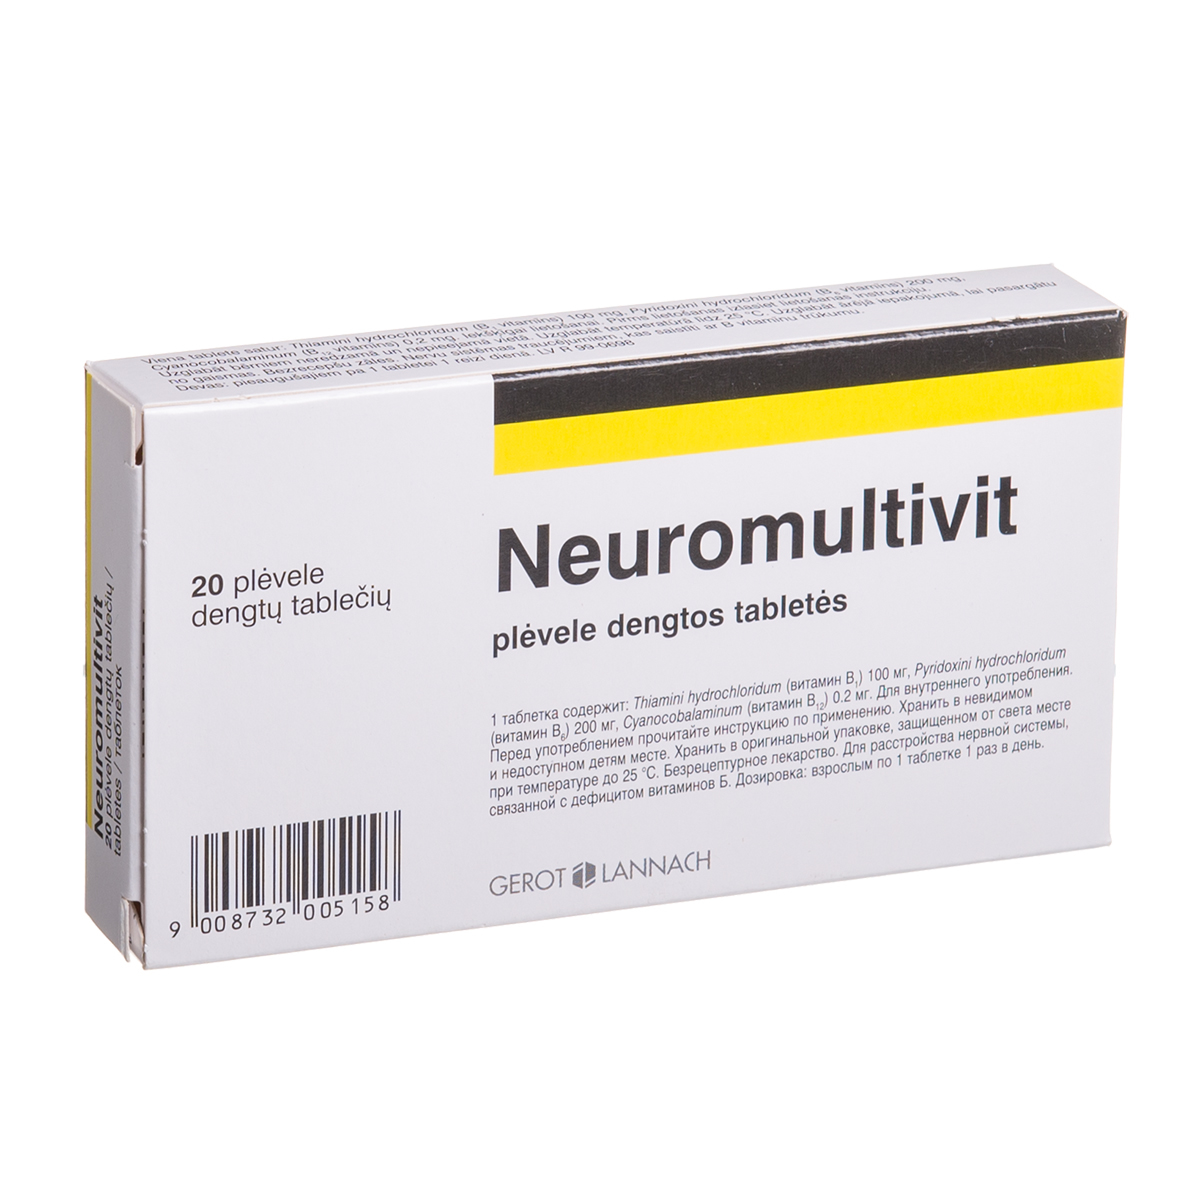 NEUROMULTIVIT, plėvele dengtos tabletės, N20